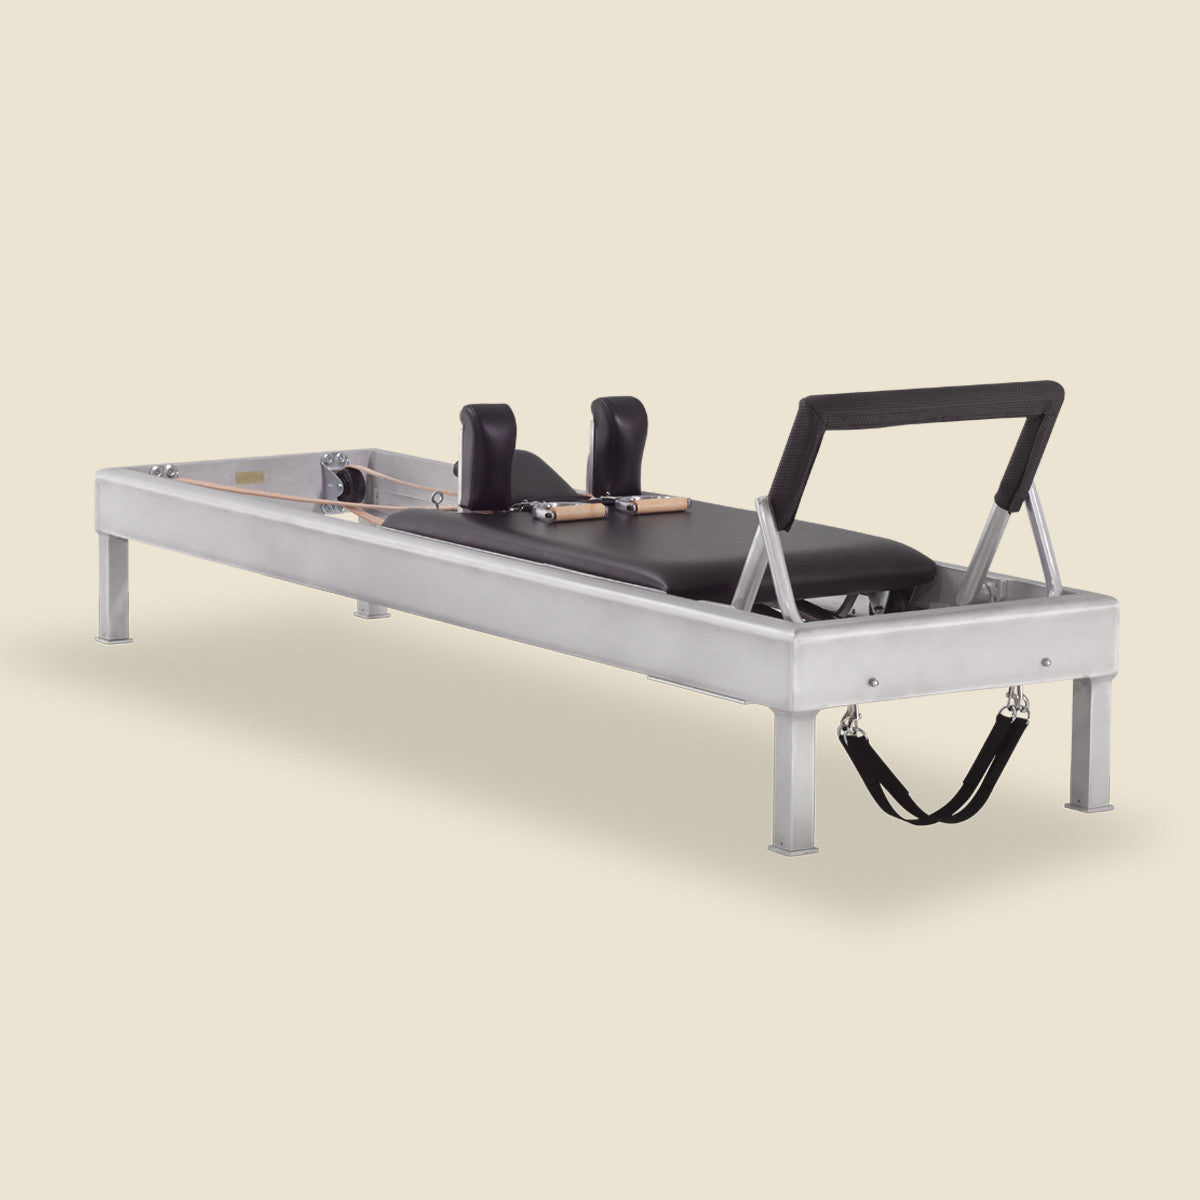 Legacy Pilates Apparatus - Industrial Equipment Supplier